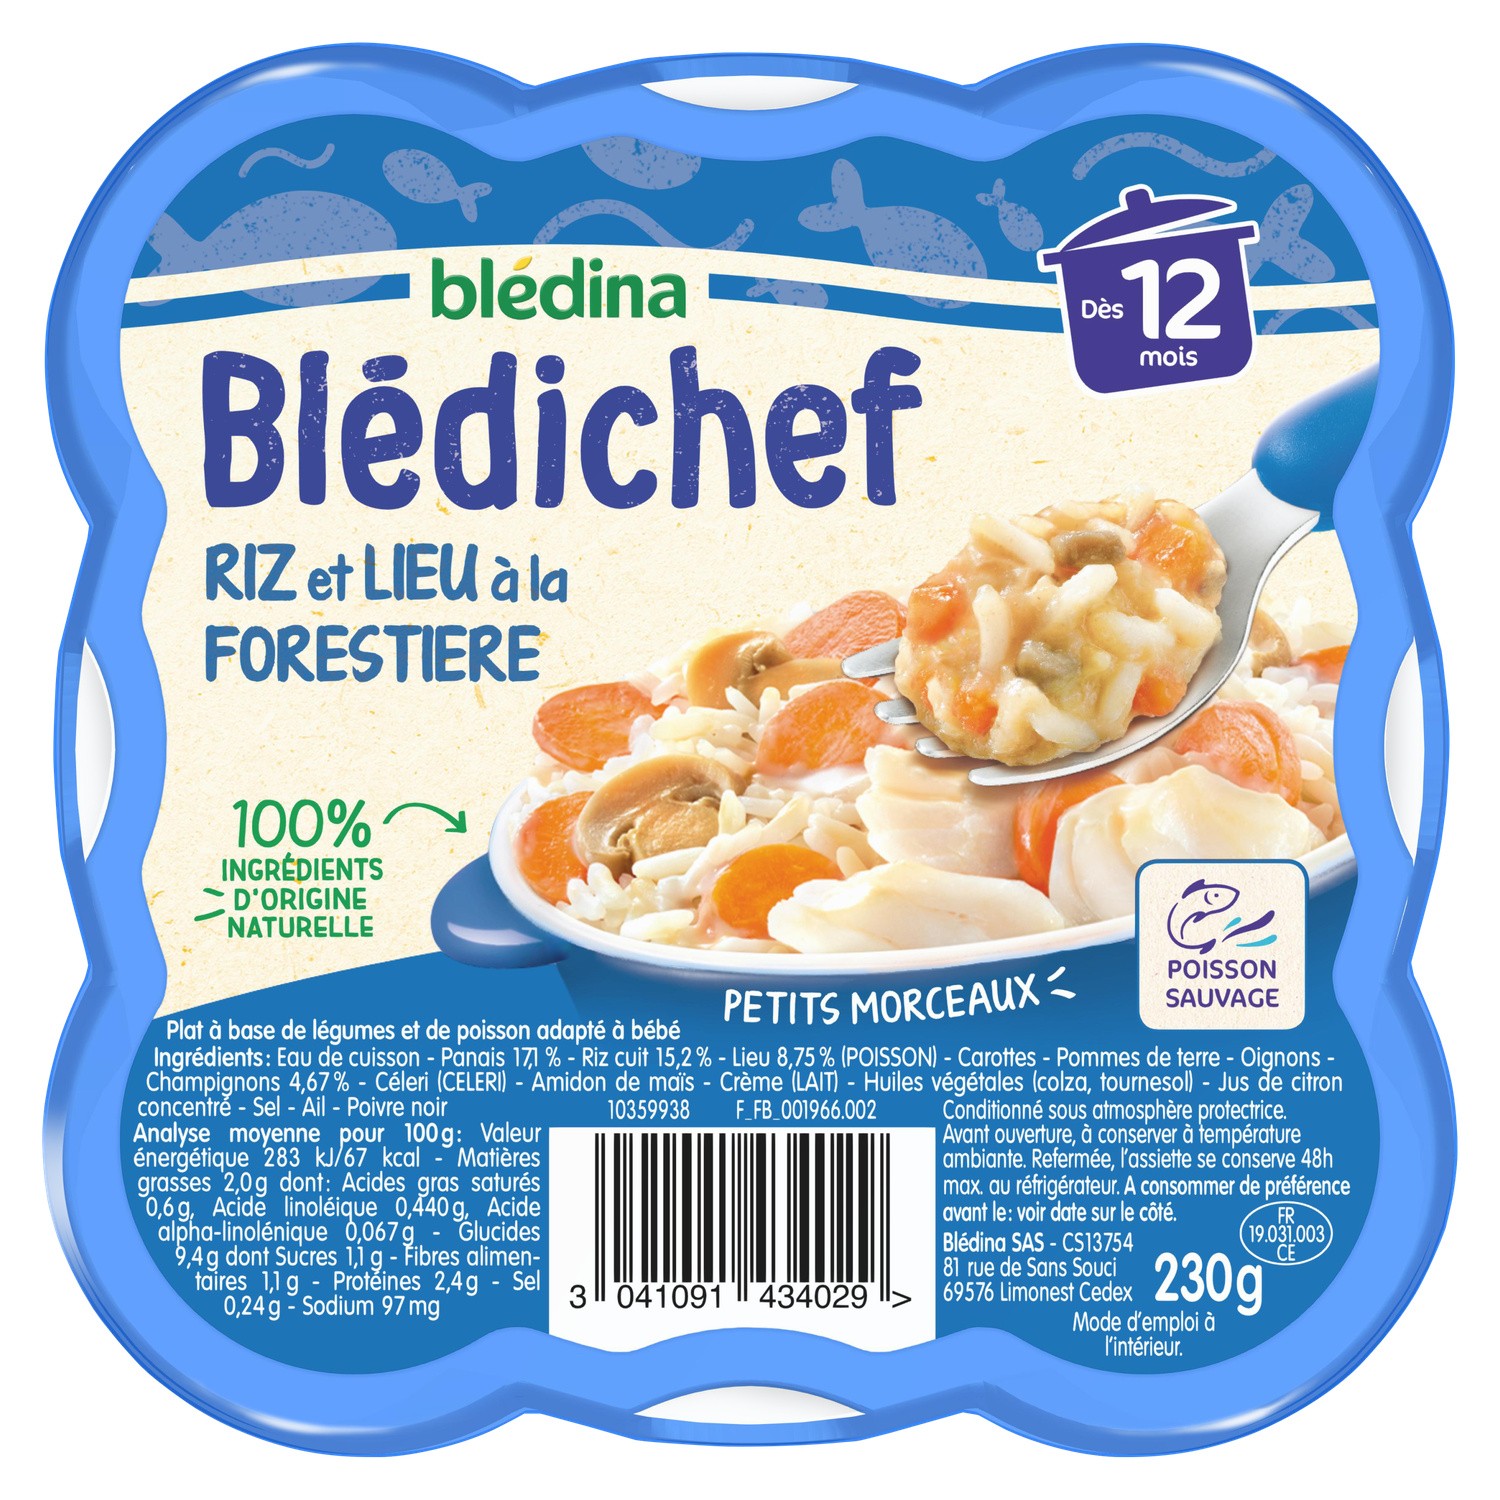 Bledina Bledichef Hake filet forestiere, Rice from 12 months 230g